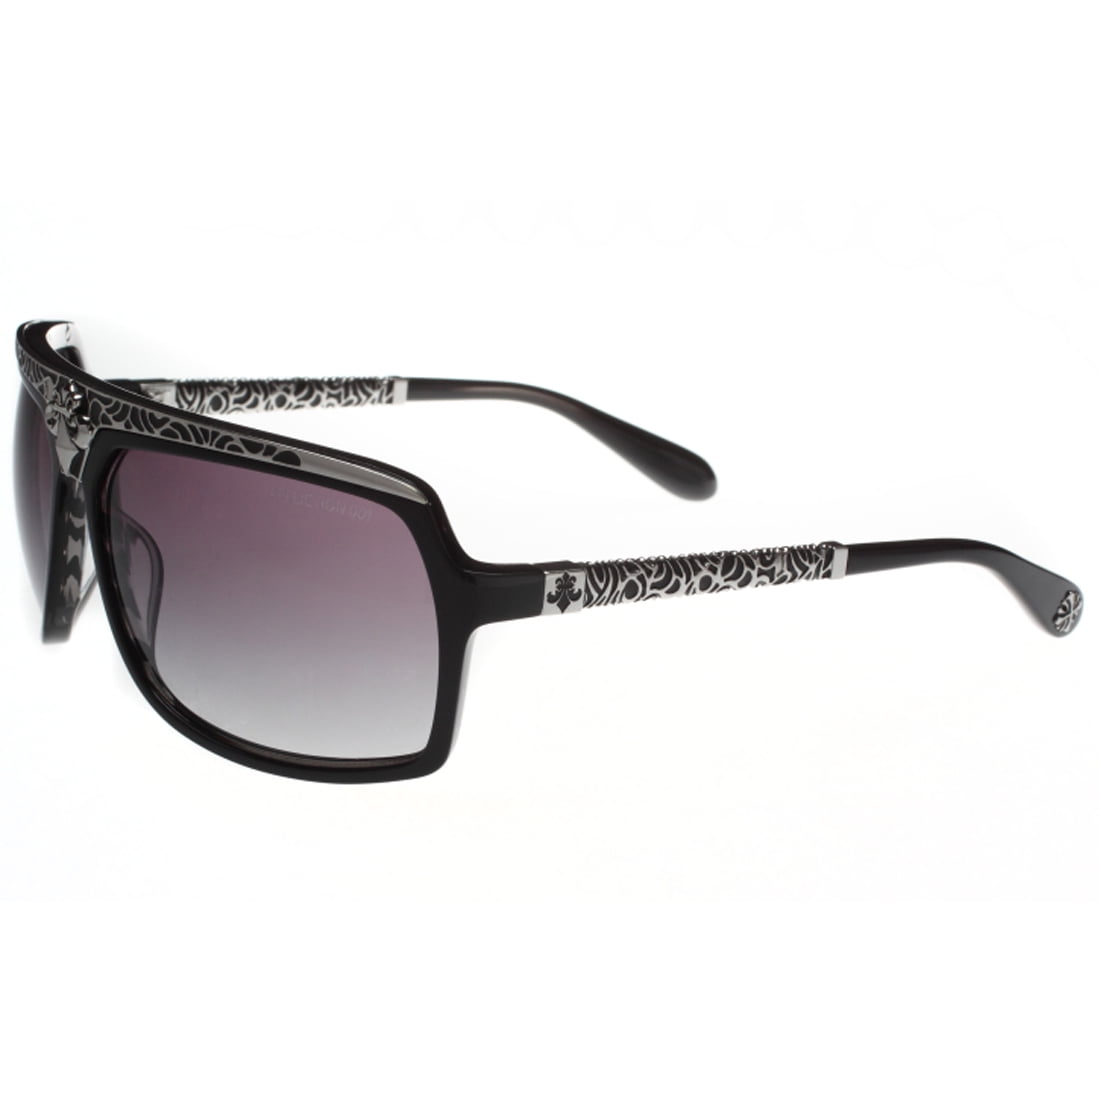 Affliction Sunglasses Glasses Talon Black Shiny Silver Authentic 65-14-130 New 